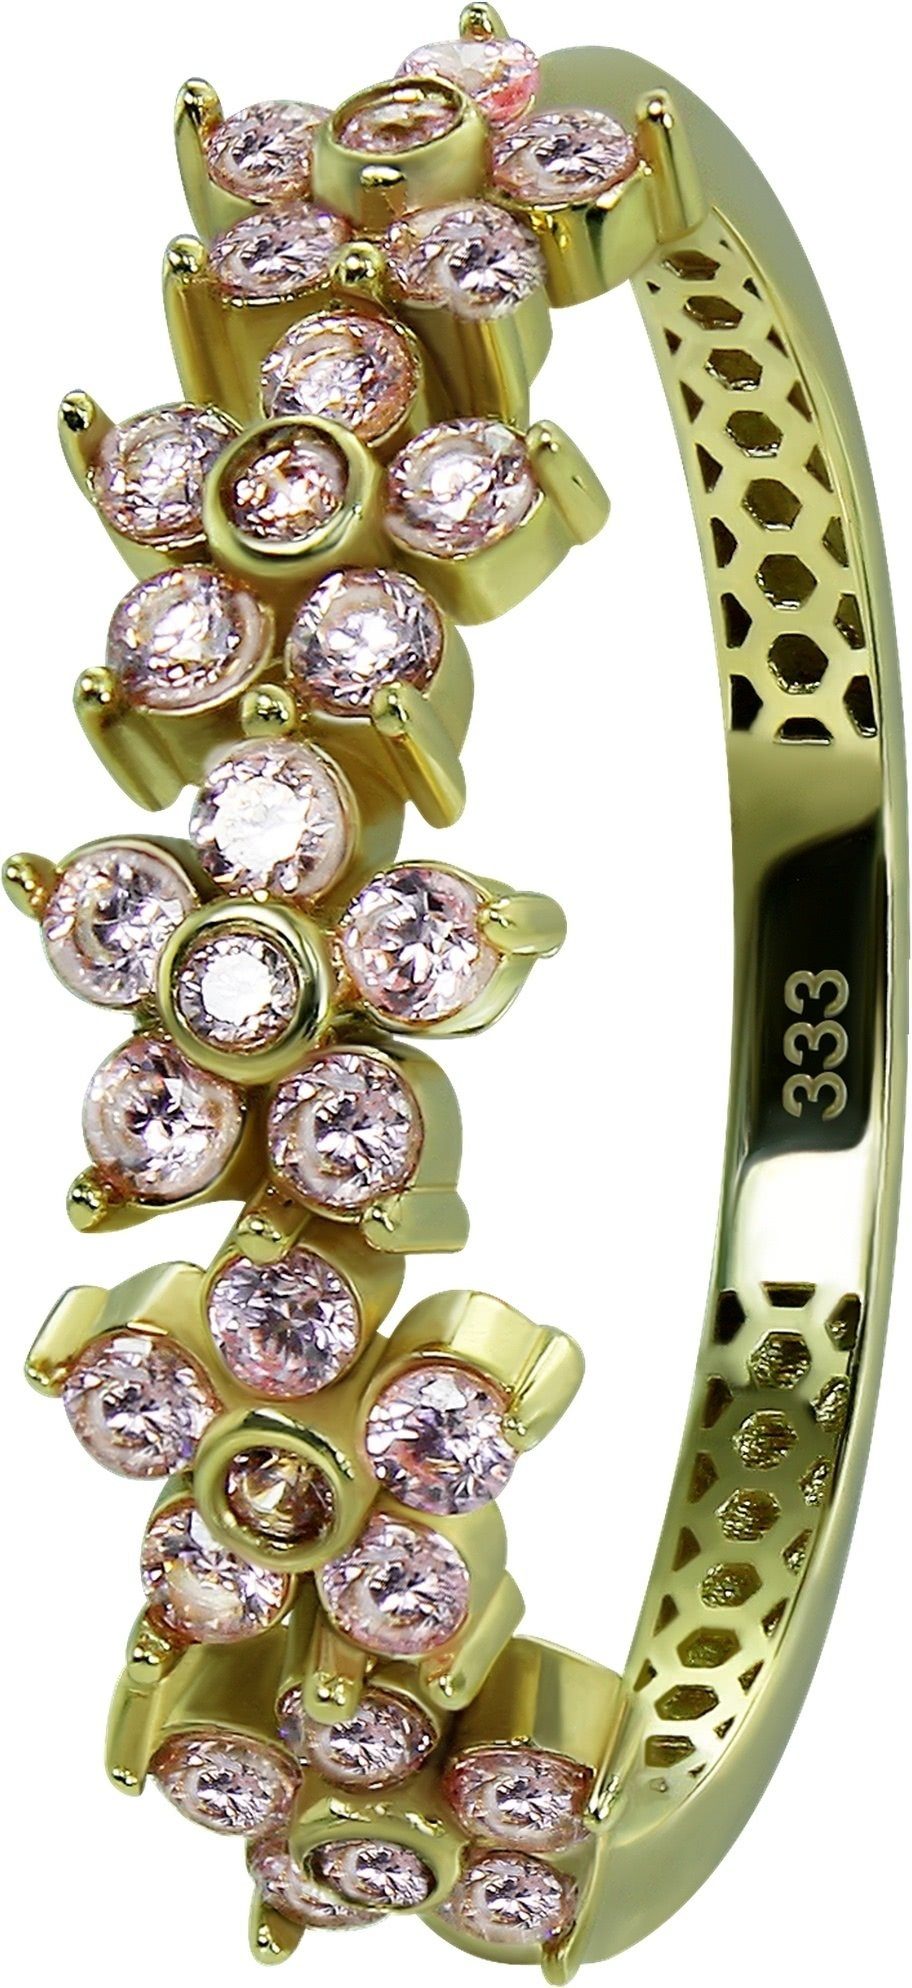 - Ring (Fingerring), 8 Gr.60 Damen Gelbgold Ring GoldDream Farbe: rosa Karat, gold, Blumen 333 GoldDream Blumen Gold Goldring